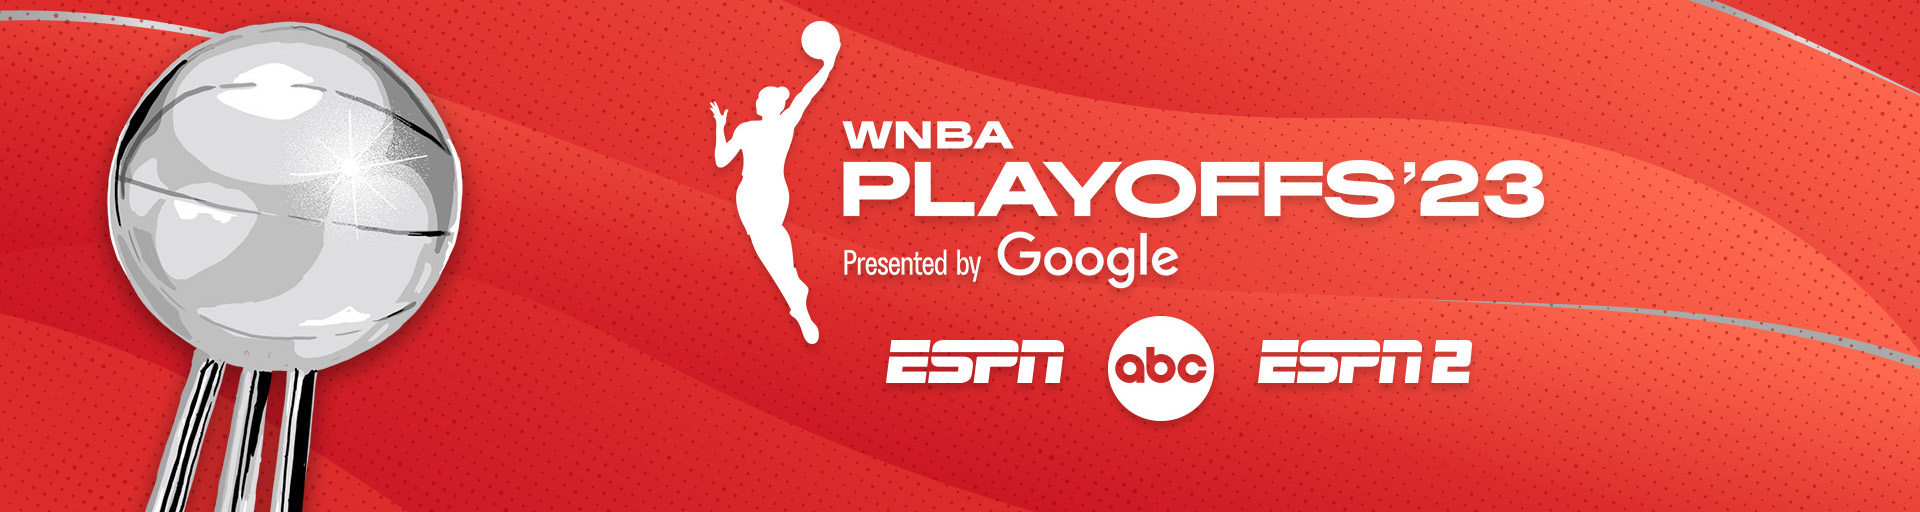 Dallas Wings 2023 Postseason WNBA Schedule - ESPN